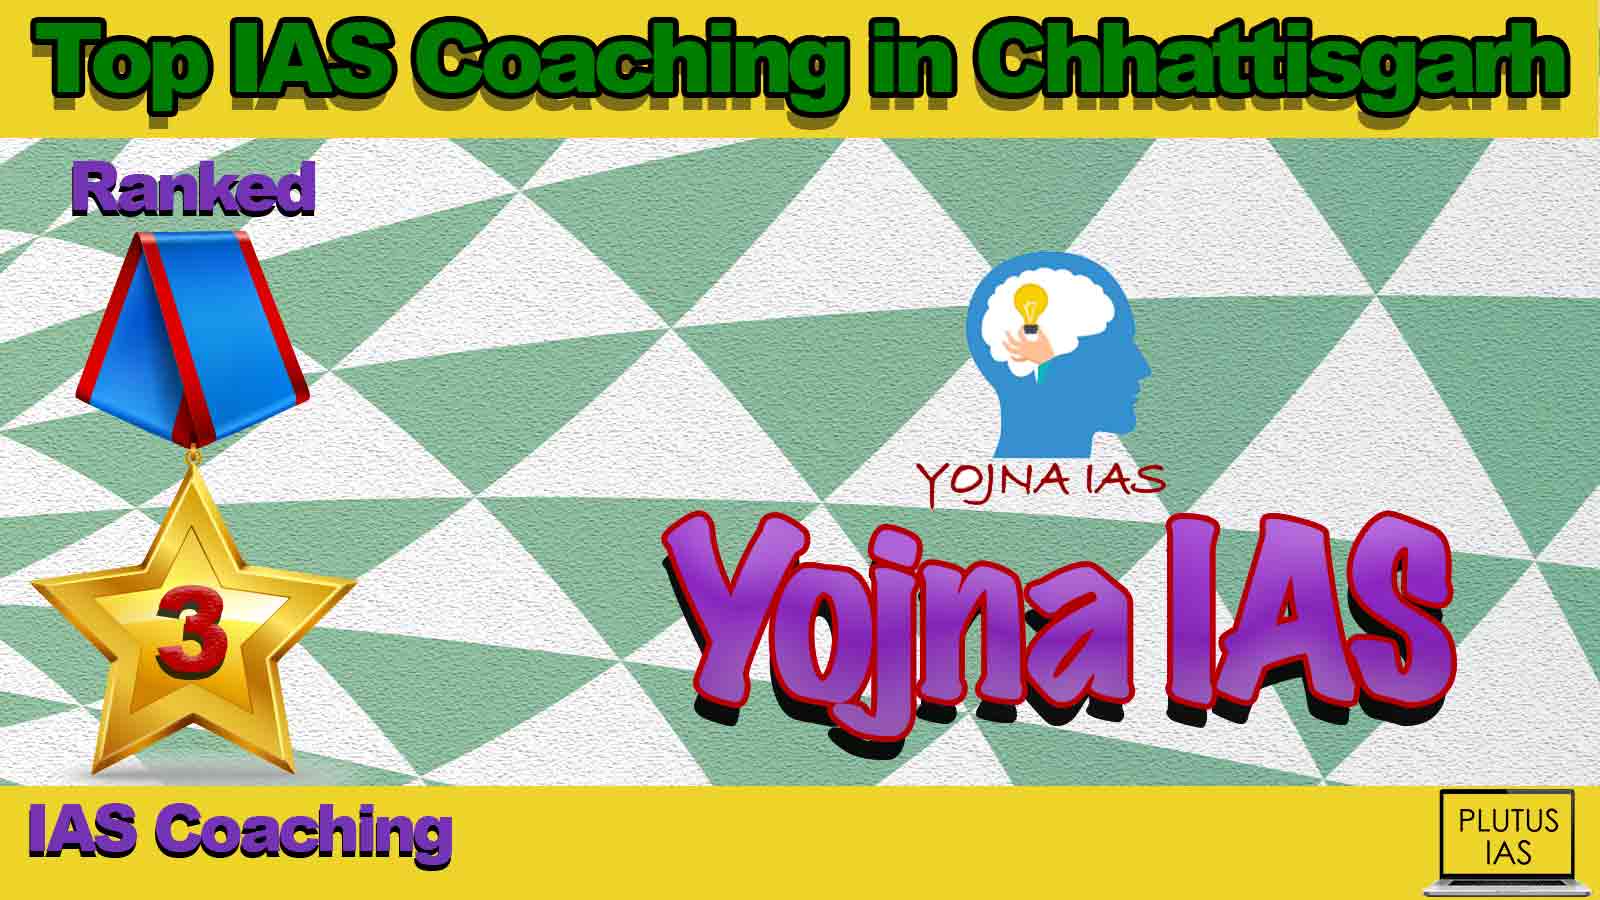 Best IAS Coaching in Chhattisgarh